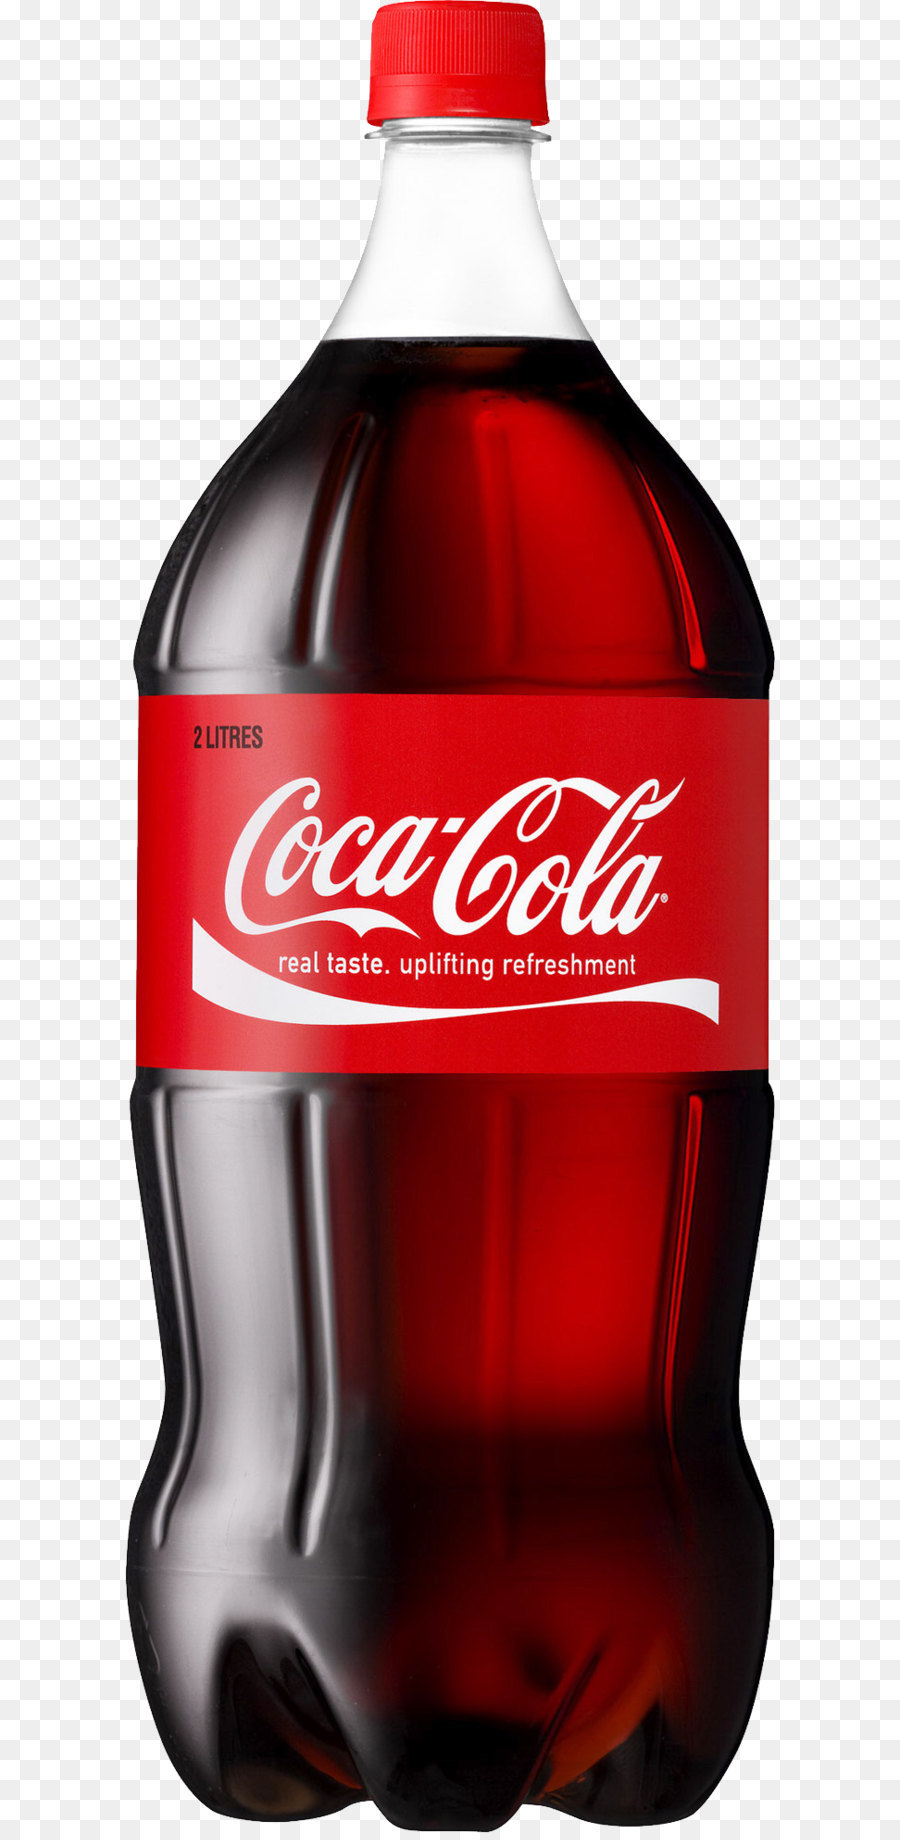 Coca cola bottle PNG image png download - 702*1980 - Free Transparent Coca Cola png Download.